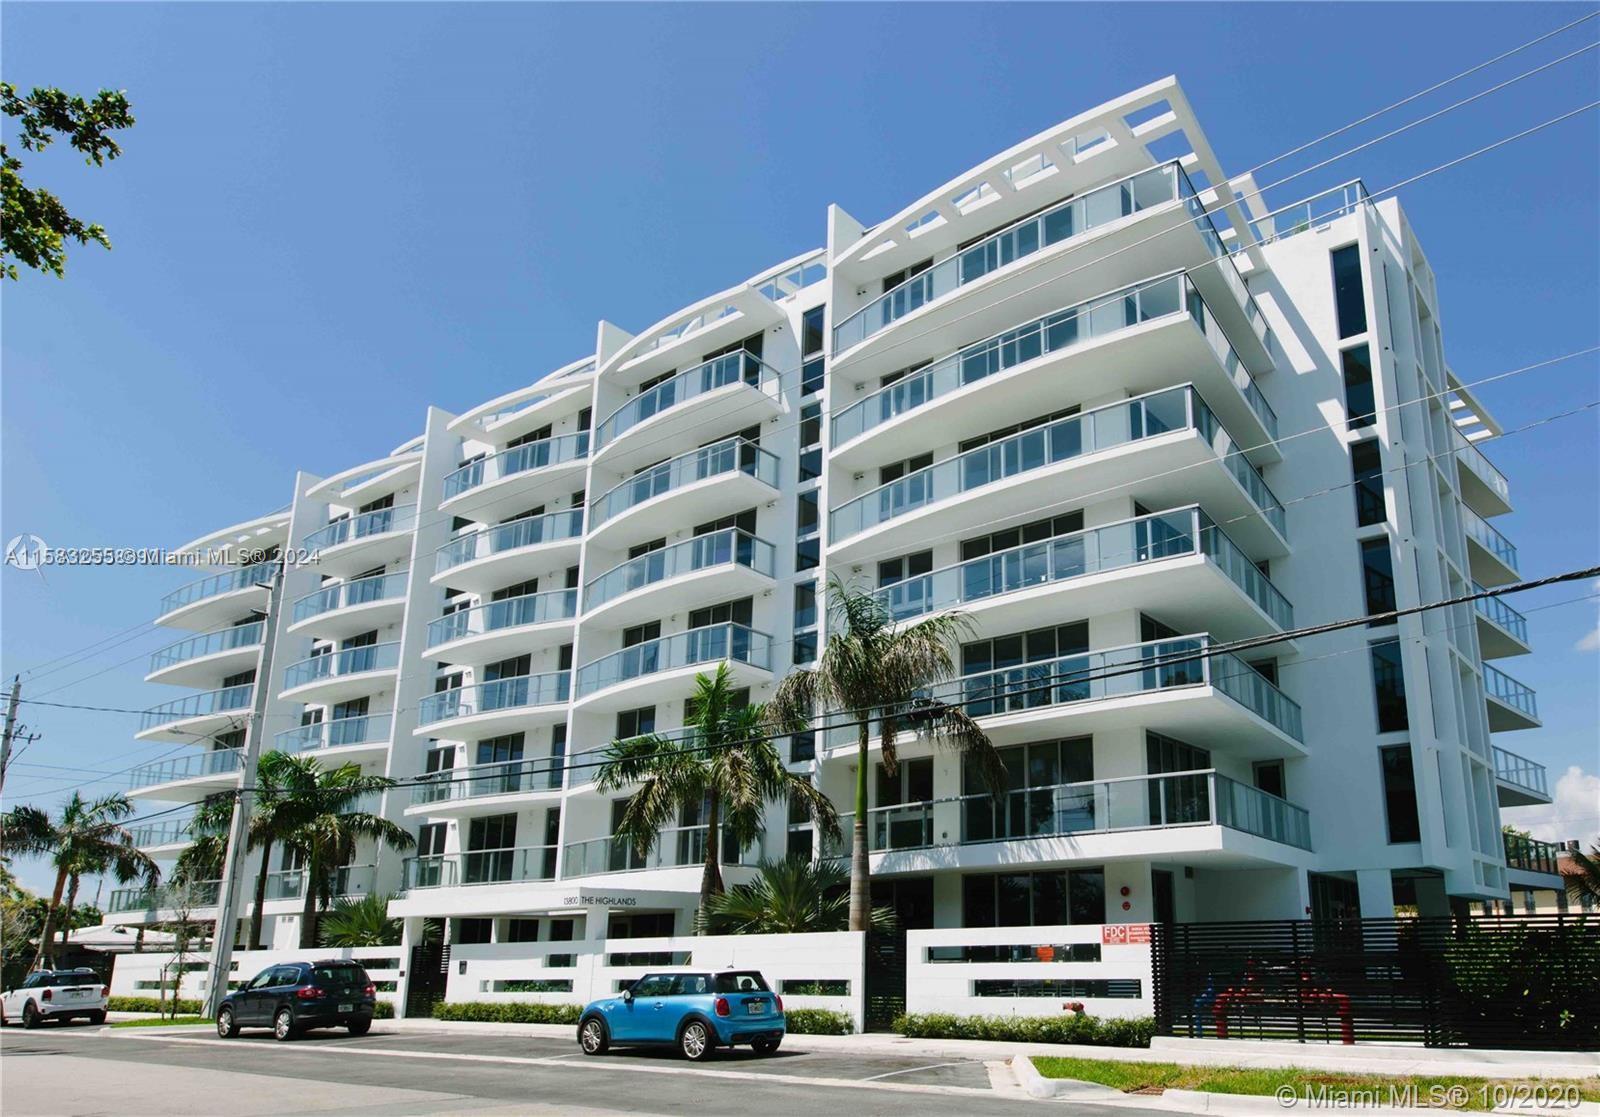 Rental Property at 13800 Highland Dr 508, North Miami Beach, Miami-Dade County, Florida - Bedrooms: 2 
Bathrooms: 2  - $3,200 MO.